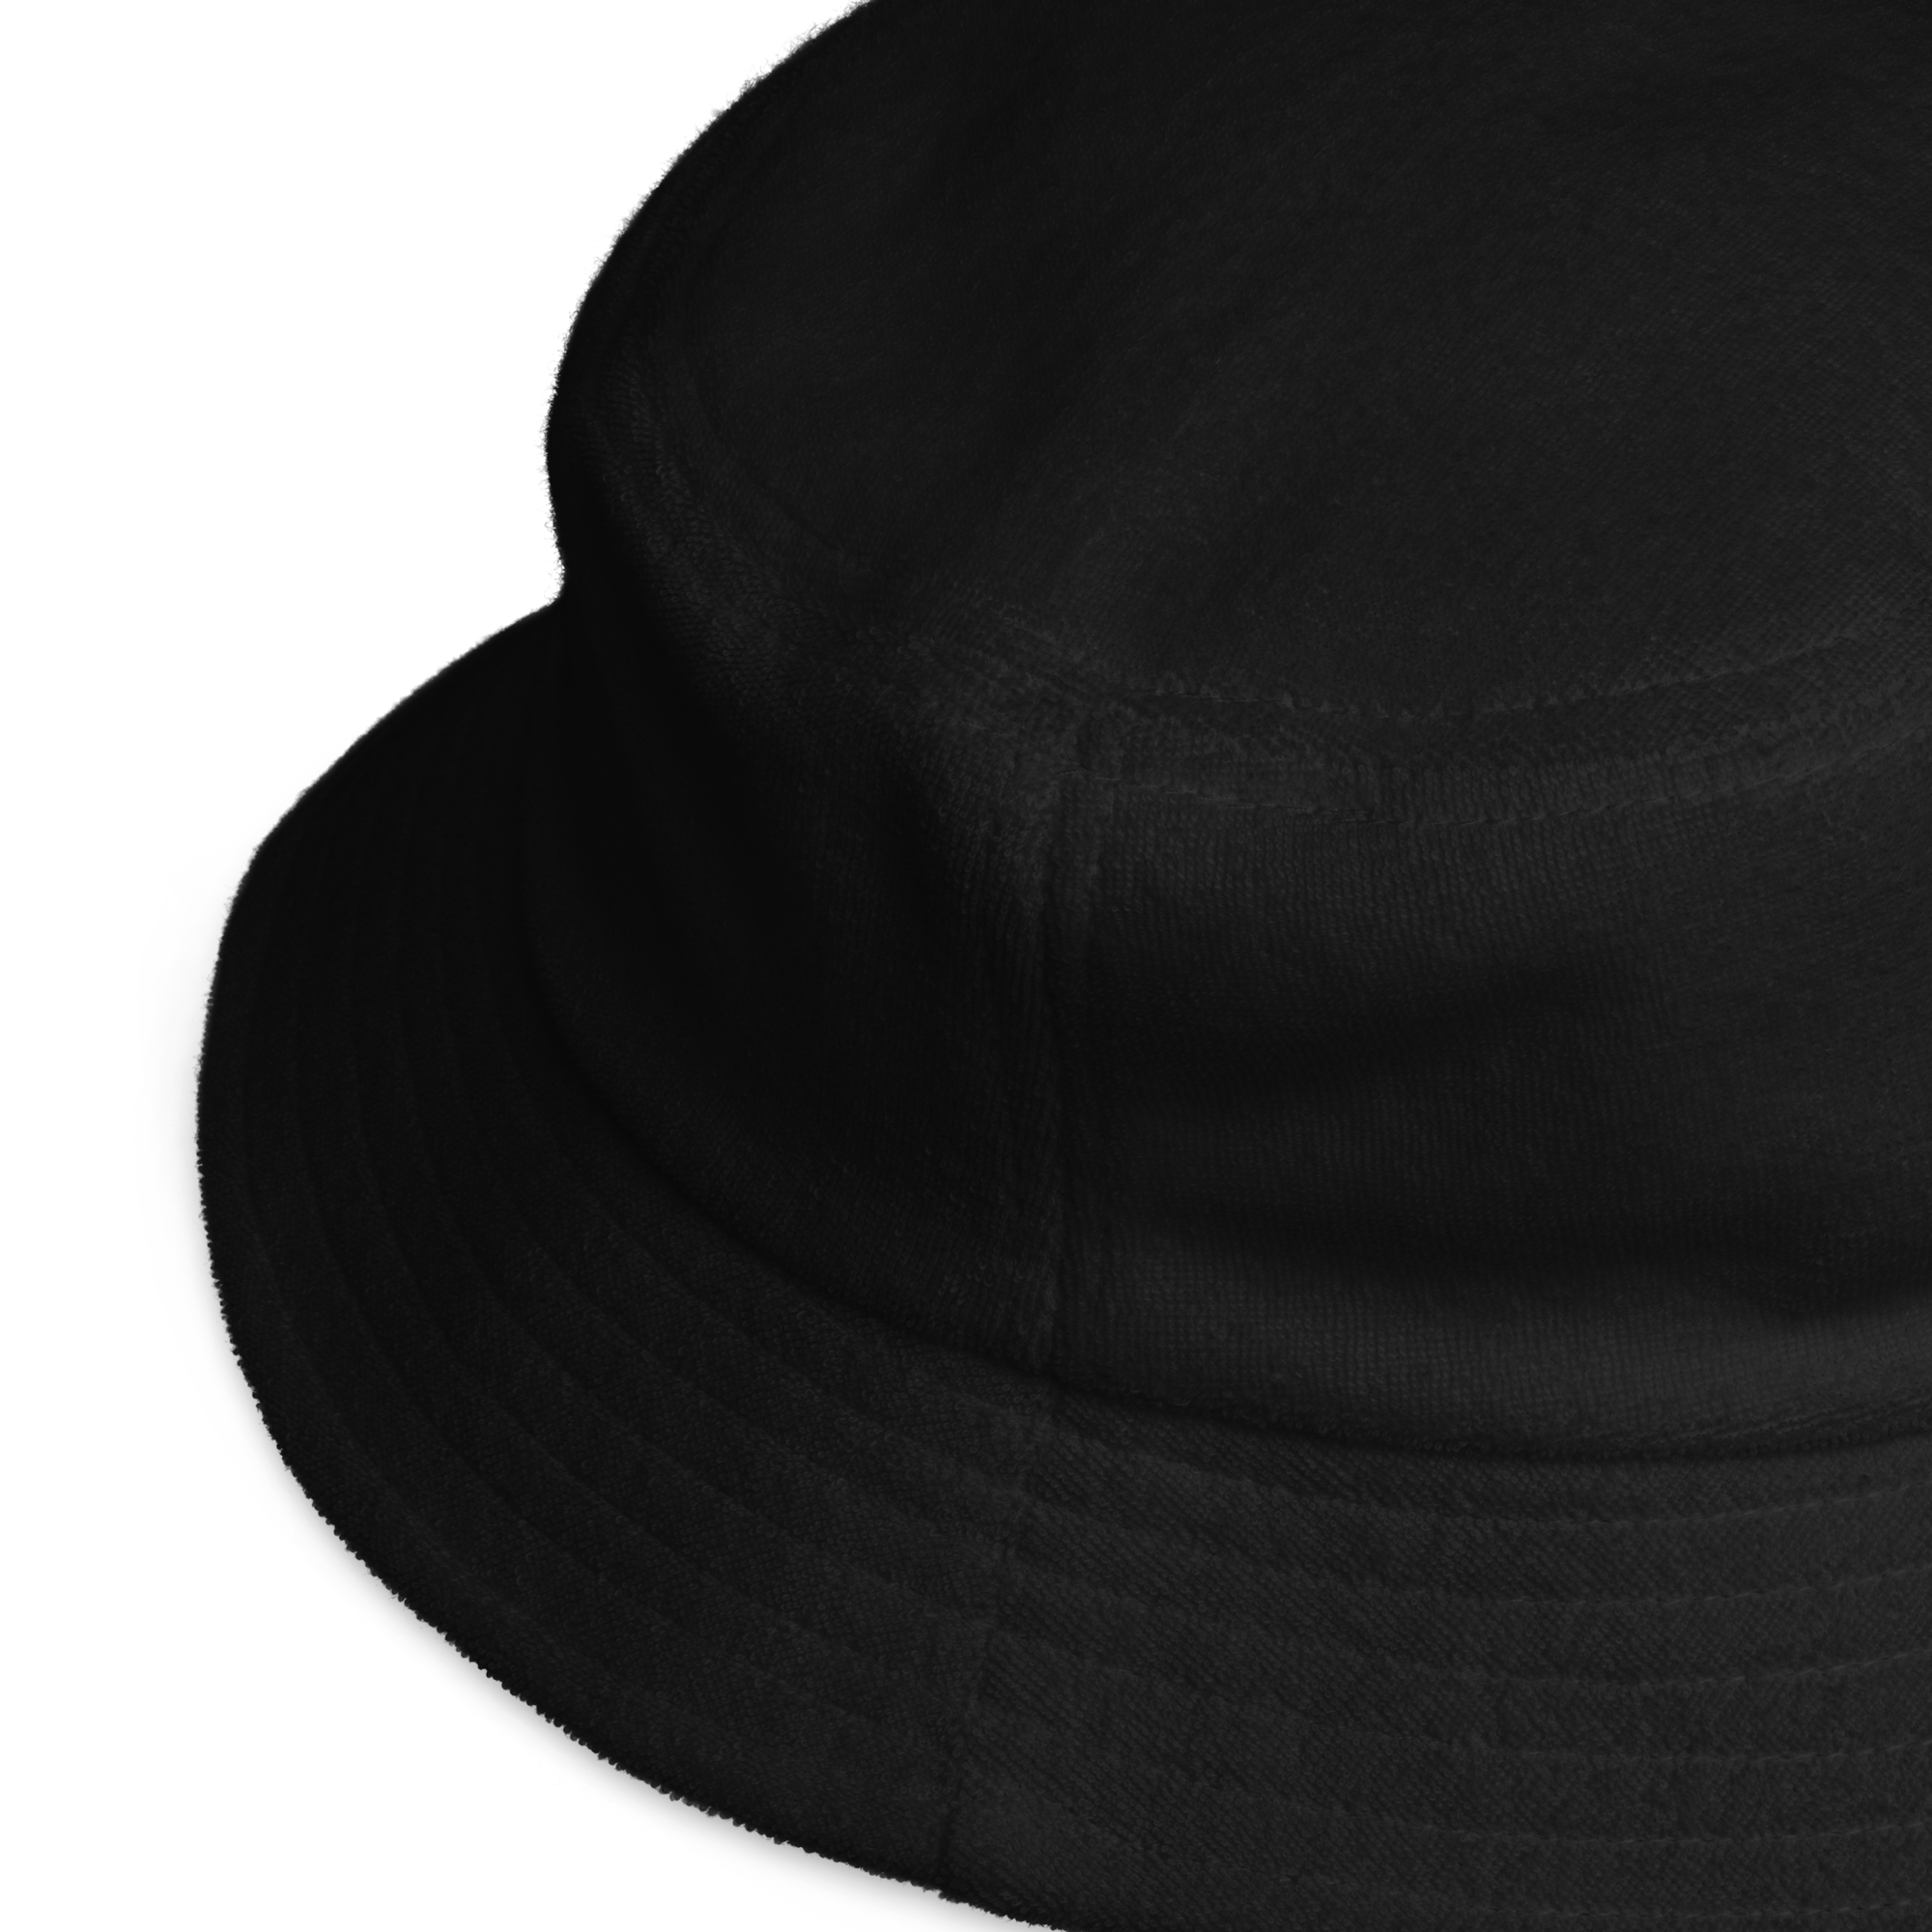 SLSY Terry cloth bucket hat